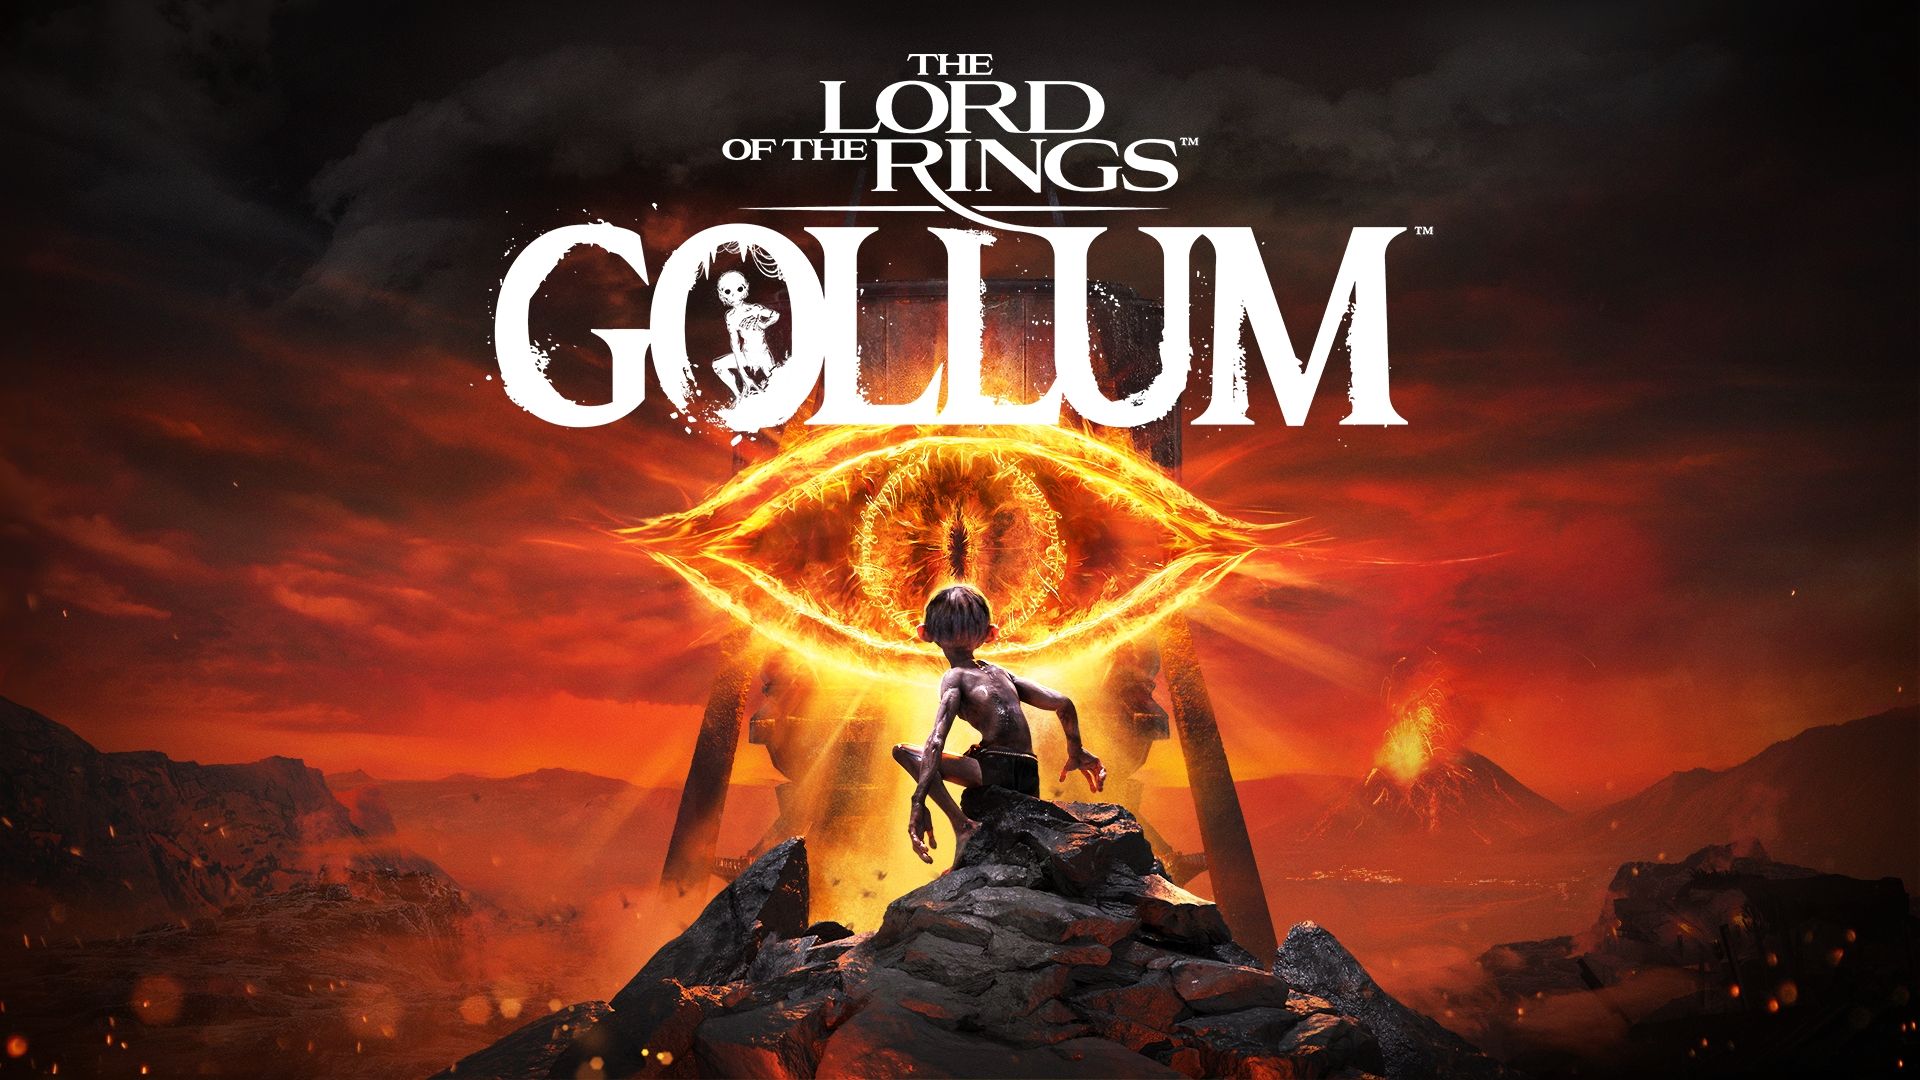 Imagem para The Lord of the Rings: Gollum chega antes de outubro